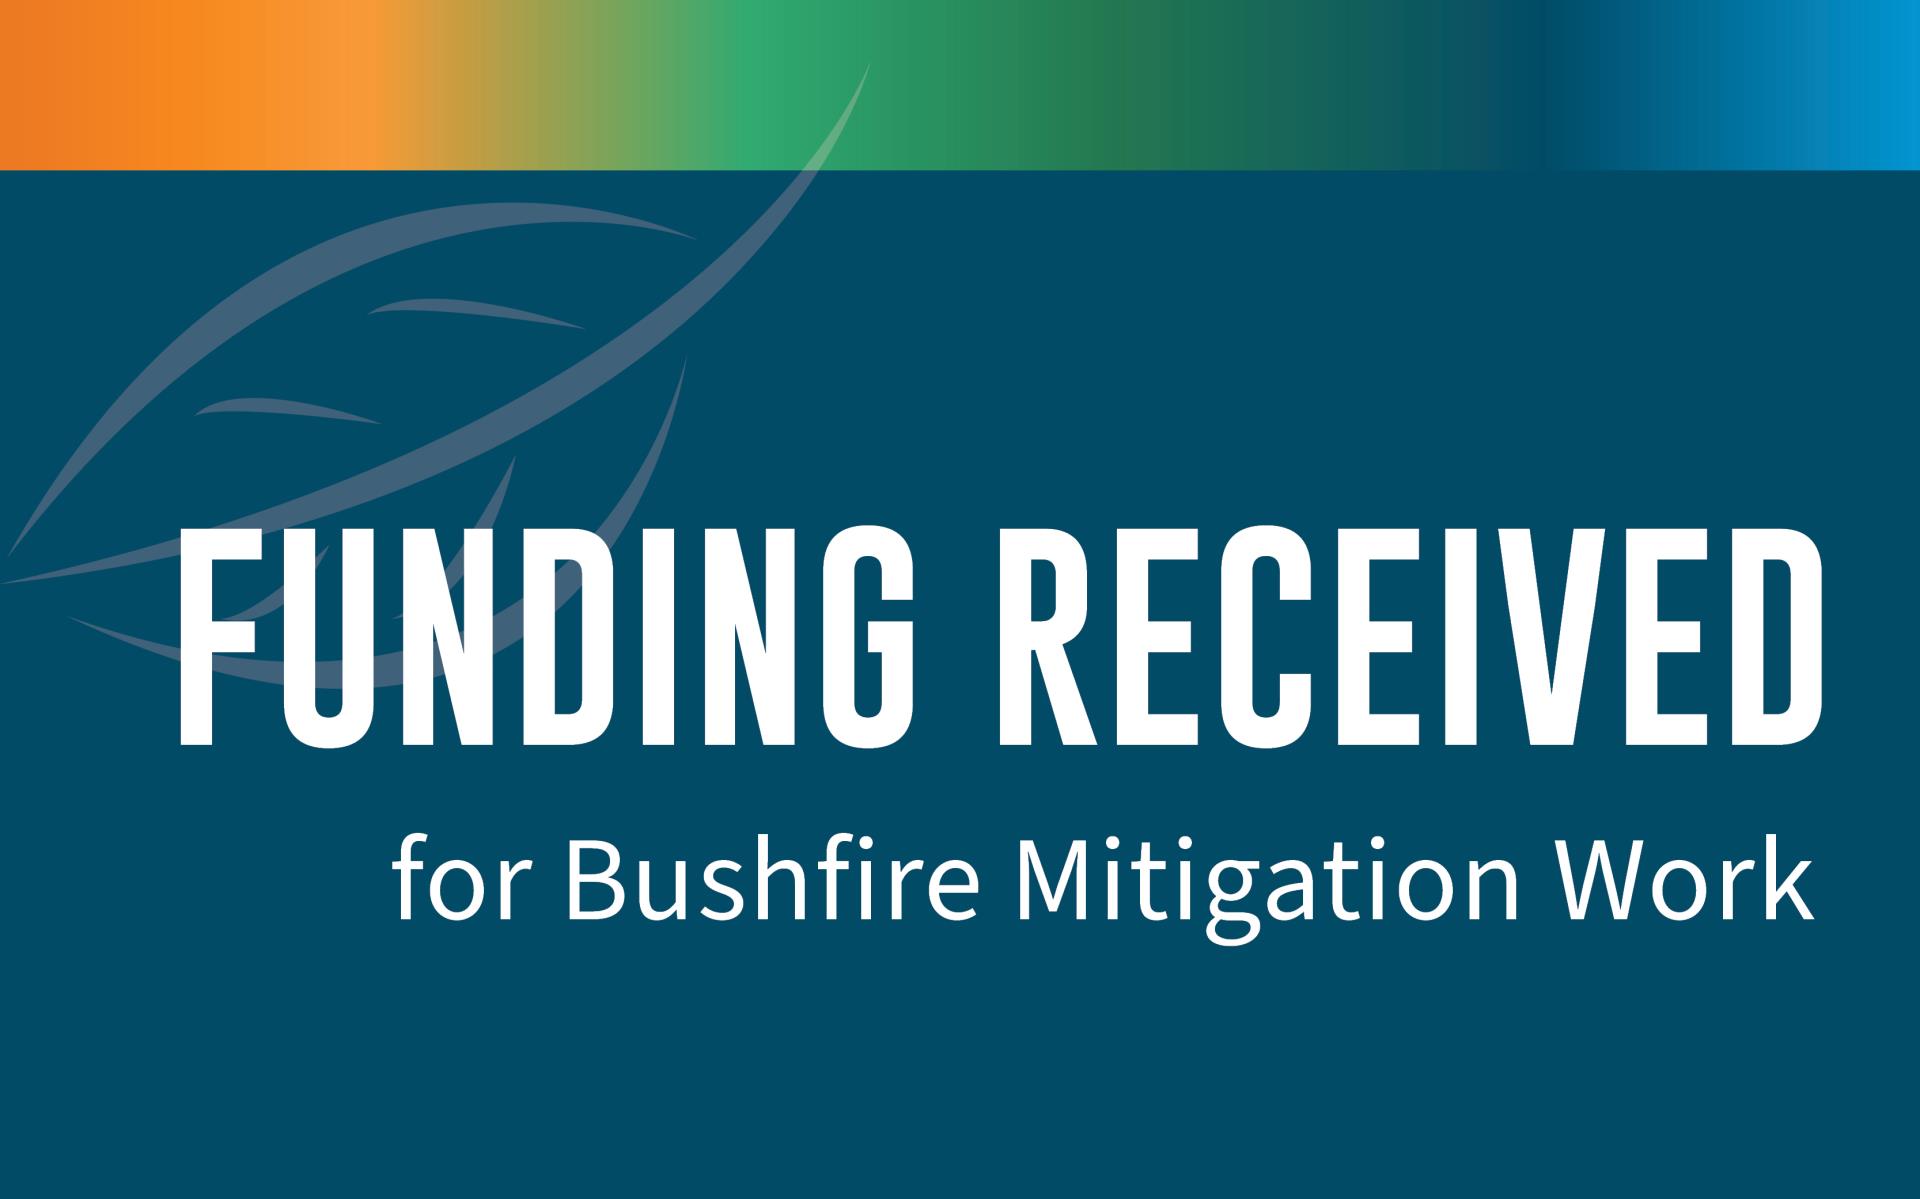 Funding received for Bushfire Mitigation Work 2023/24